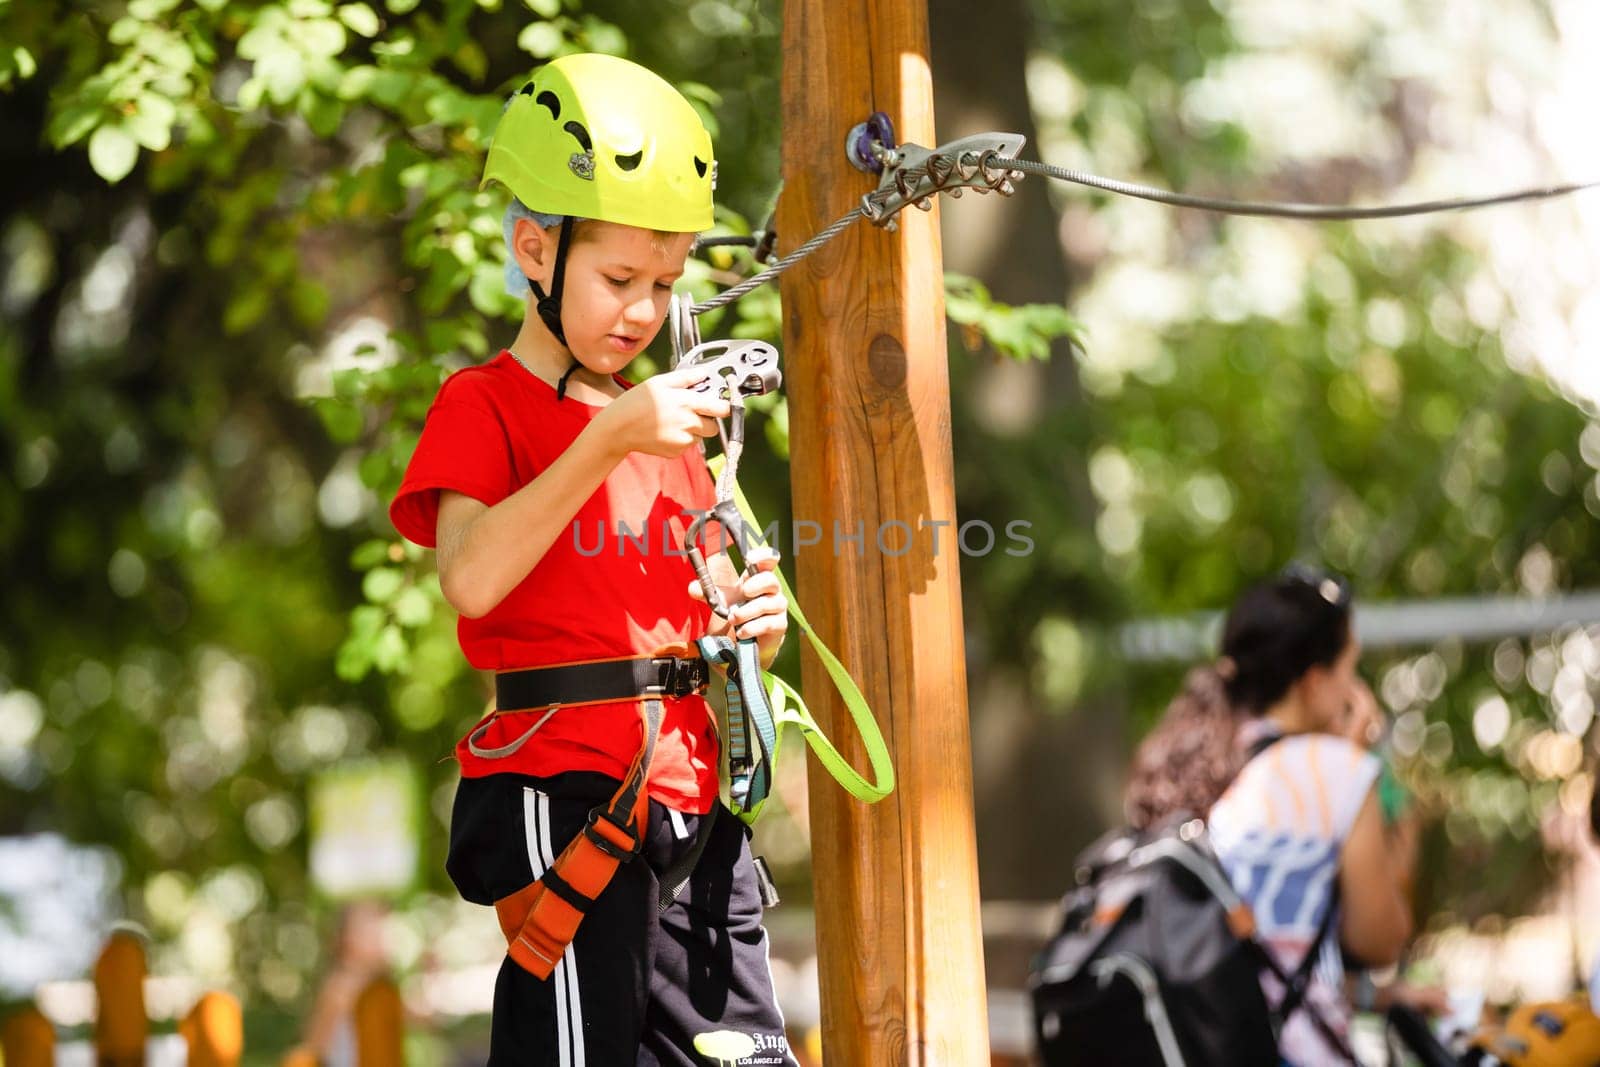 Cute school boy enjoying a sunny day in a climbing adventure activity park by Andelov13